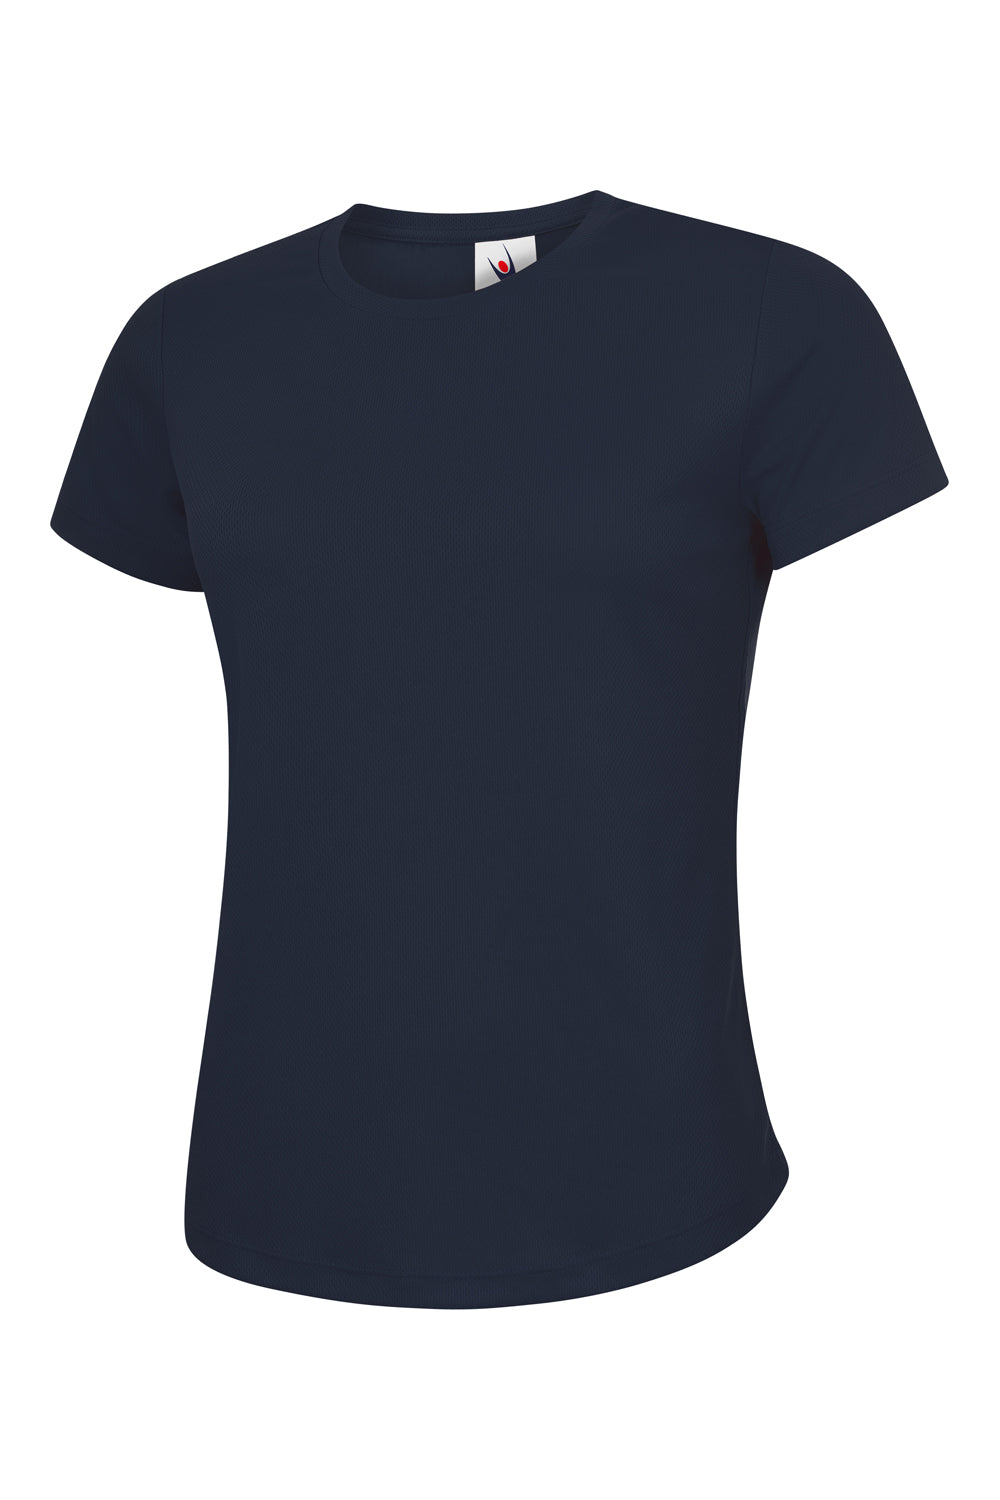 Uneek Ladies Ultra Cool T Shirt UC316 - Navy